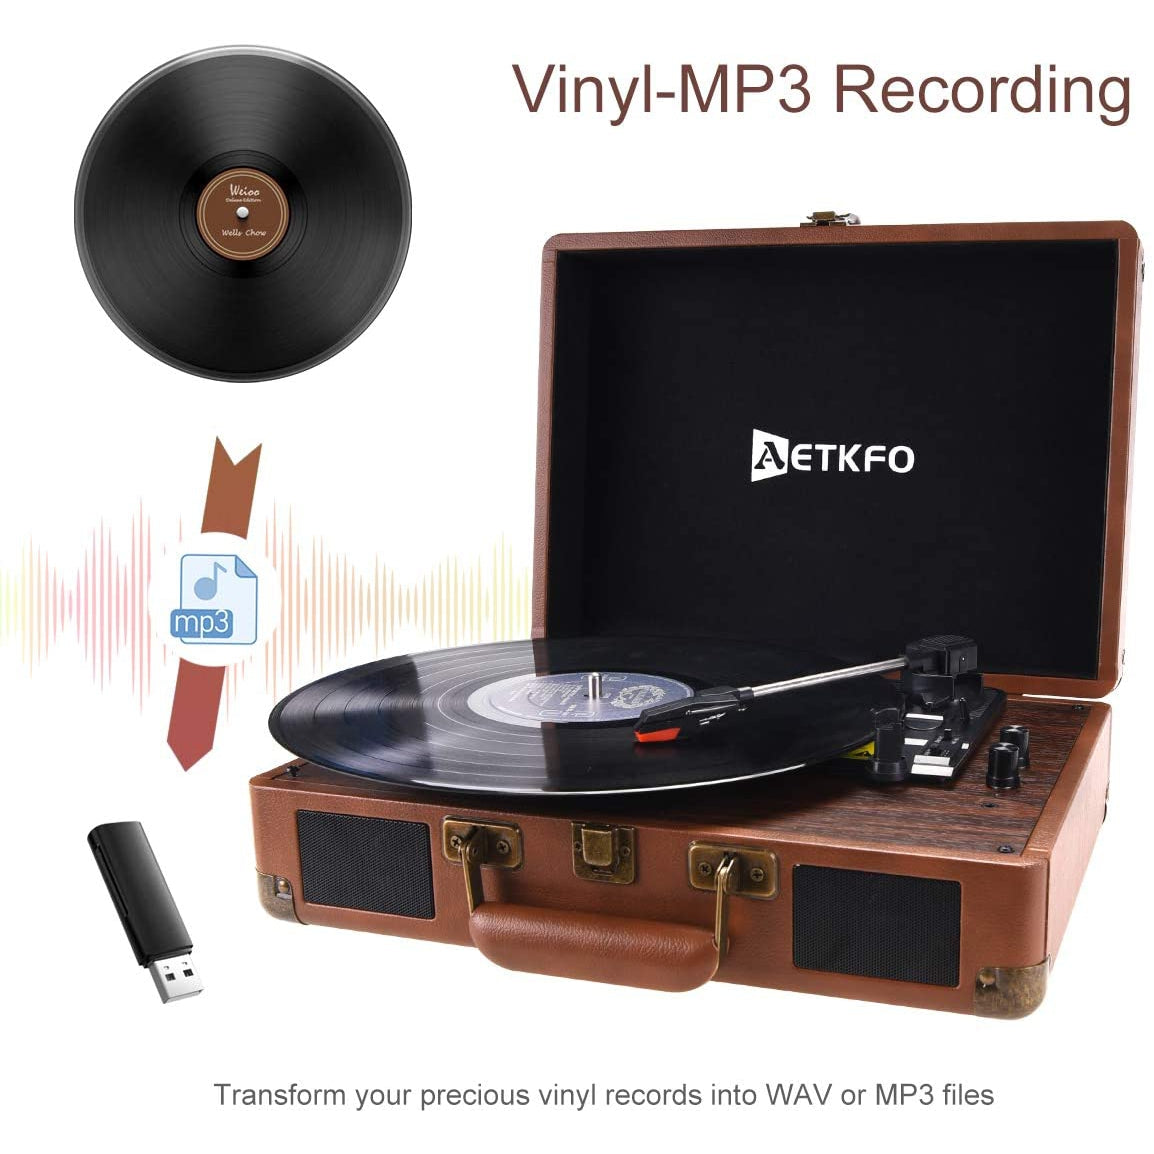 AETKFO Bluetooth Turntable 3-Speed Vinyl Record Player - Brown